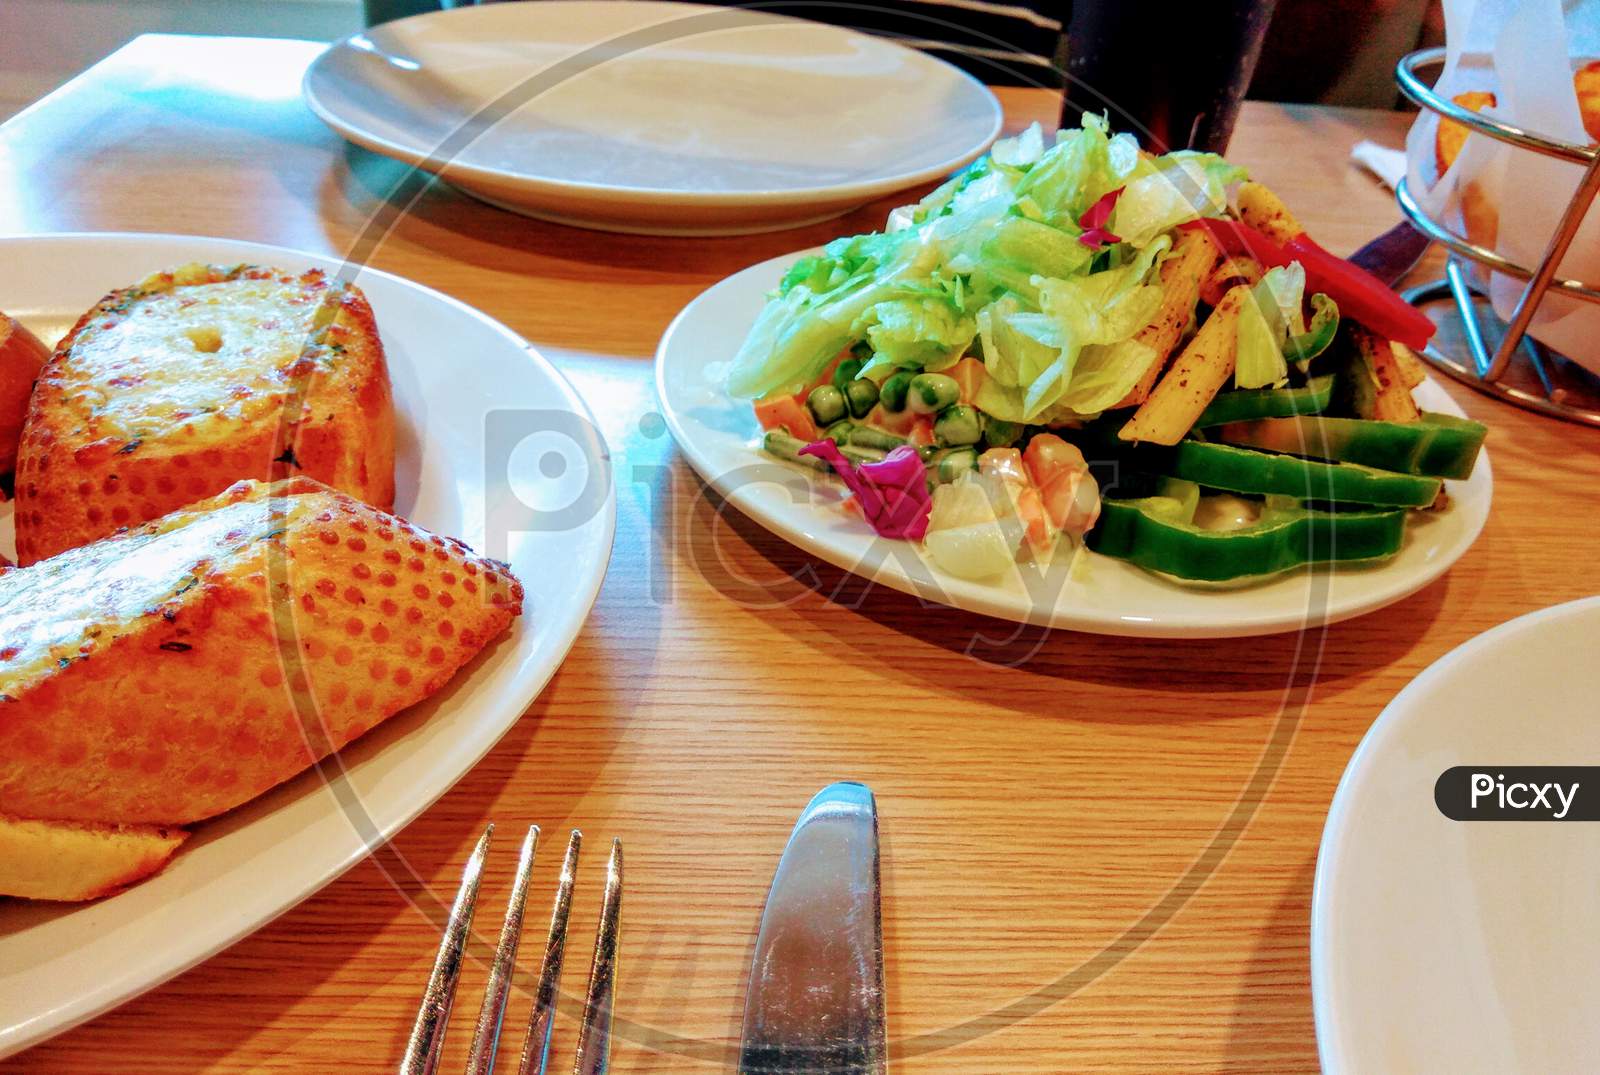 leafy salad with garlic bread at Pizza Hut, Dubai.